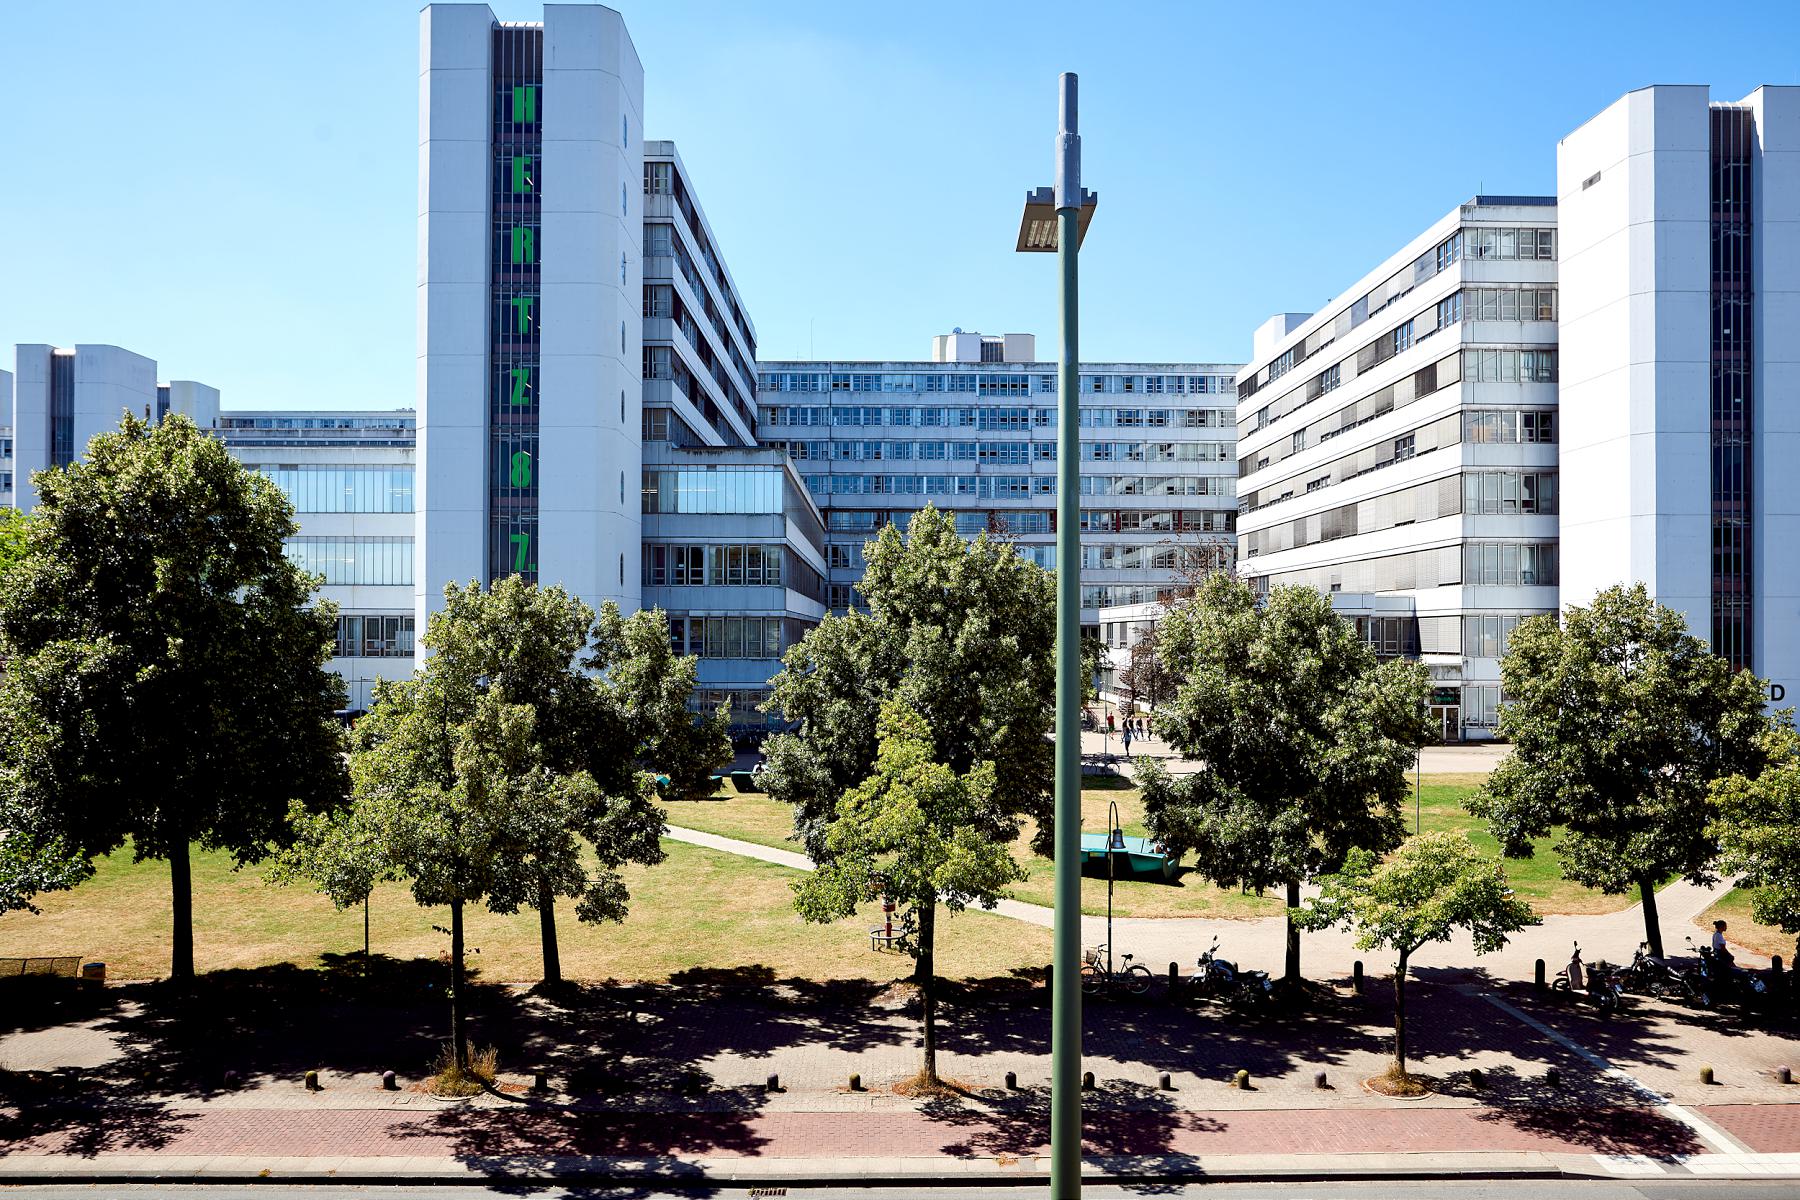 Campus of Bielefeld University